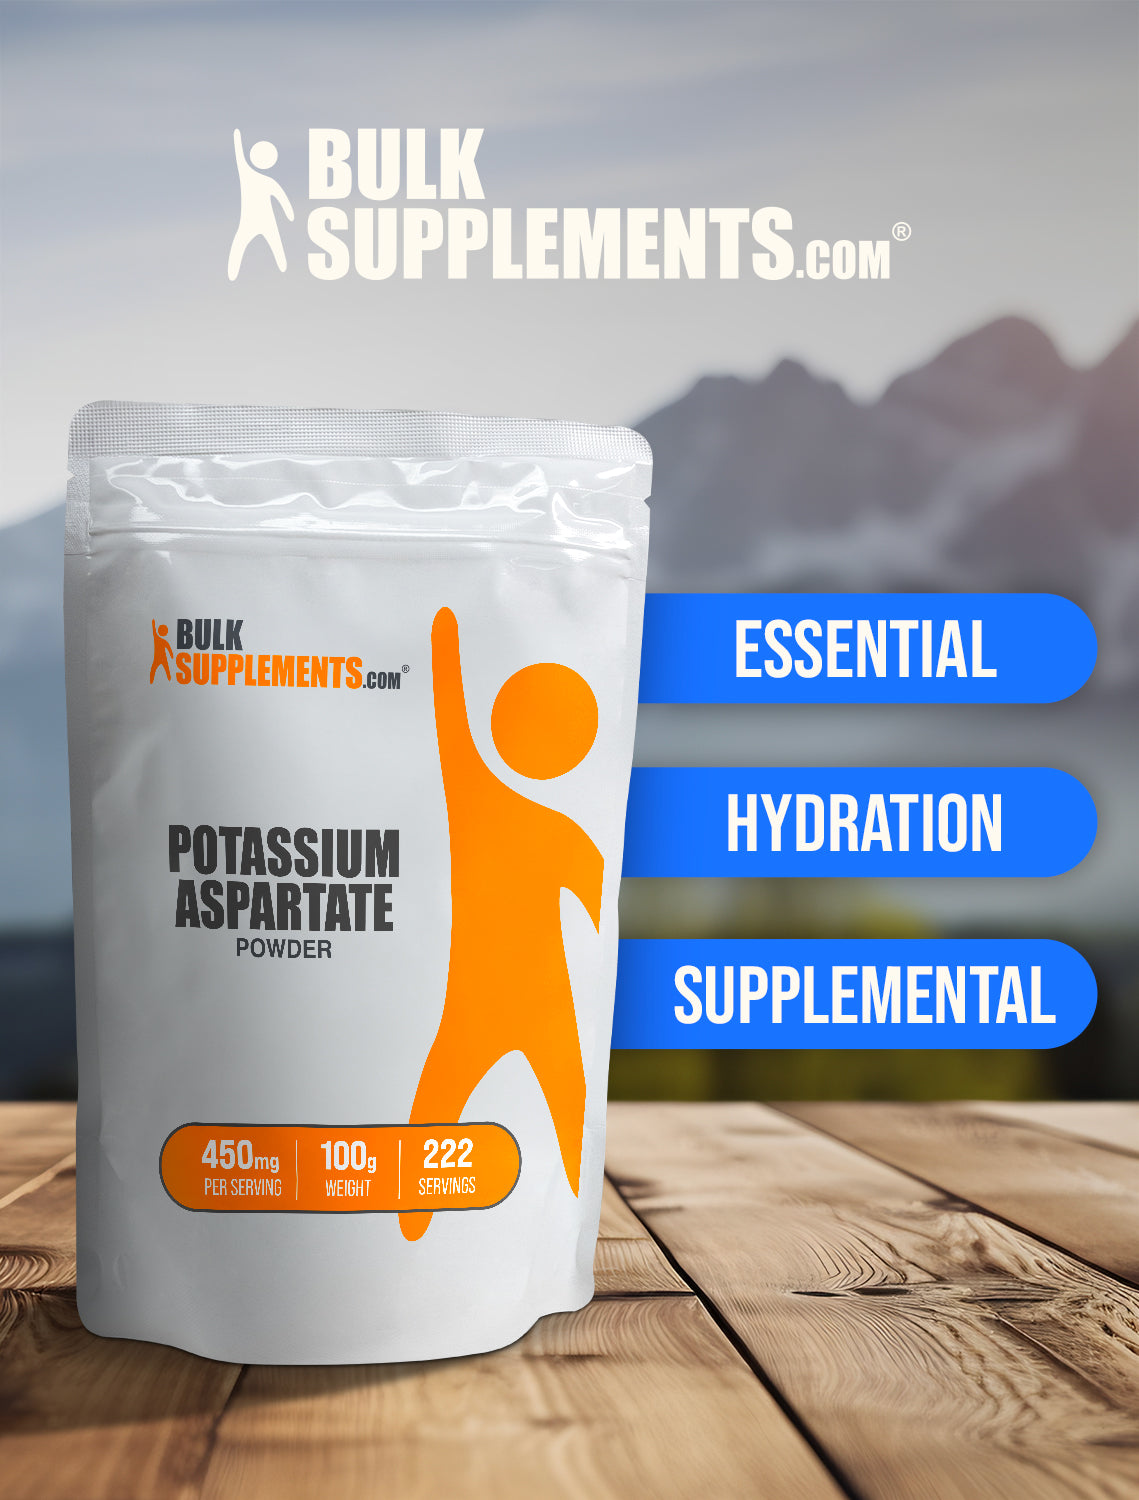 Potassium Aspartate powder keyword image 100g